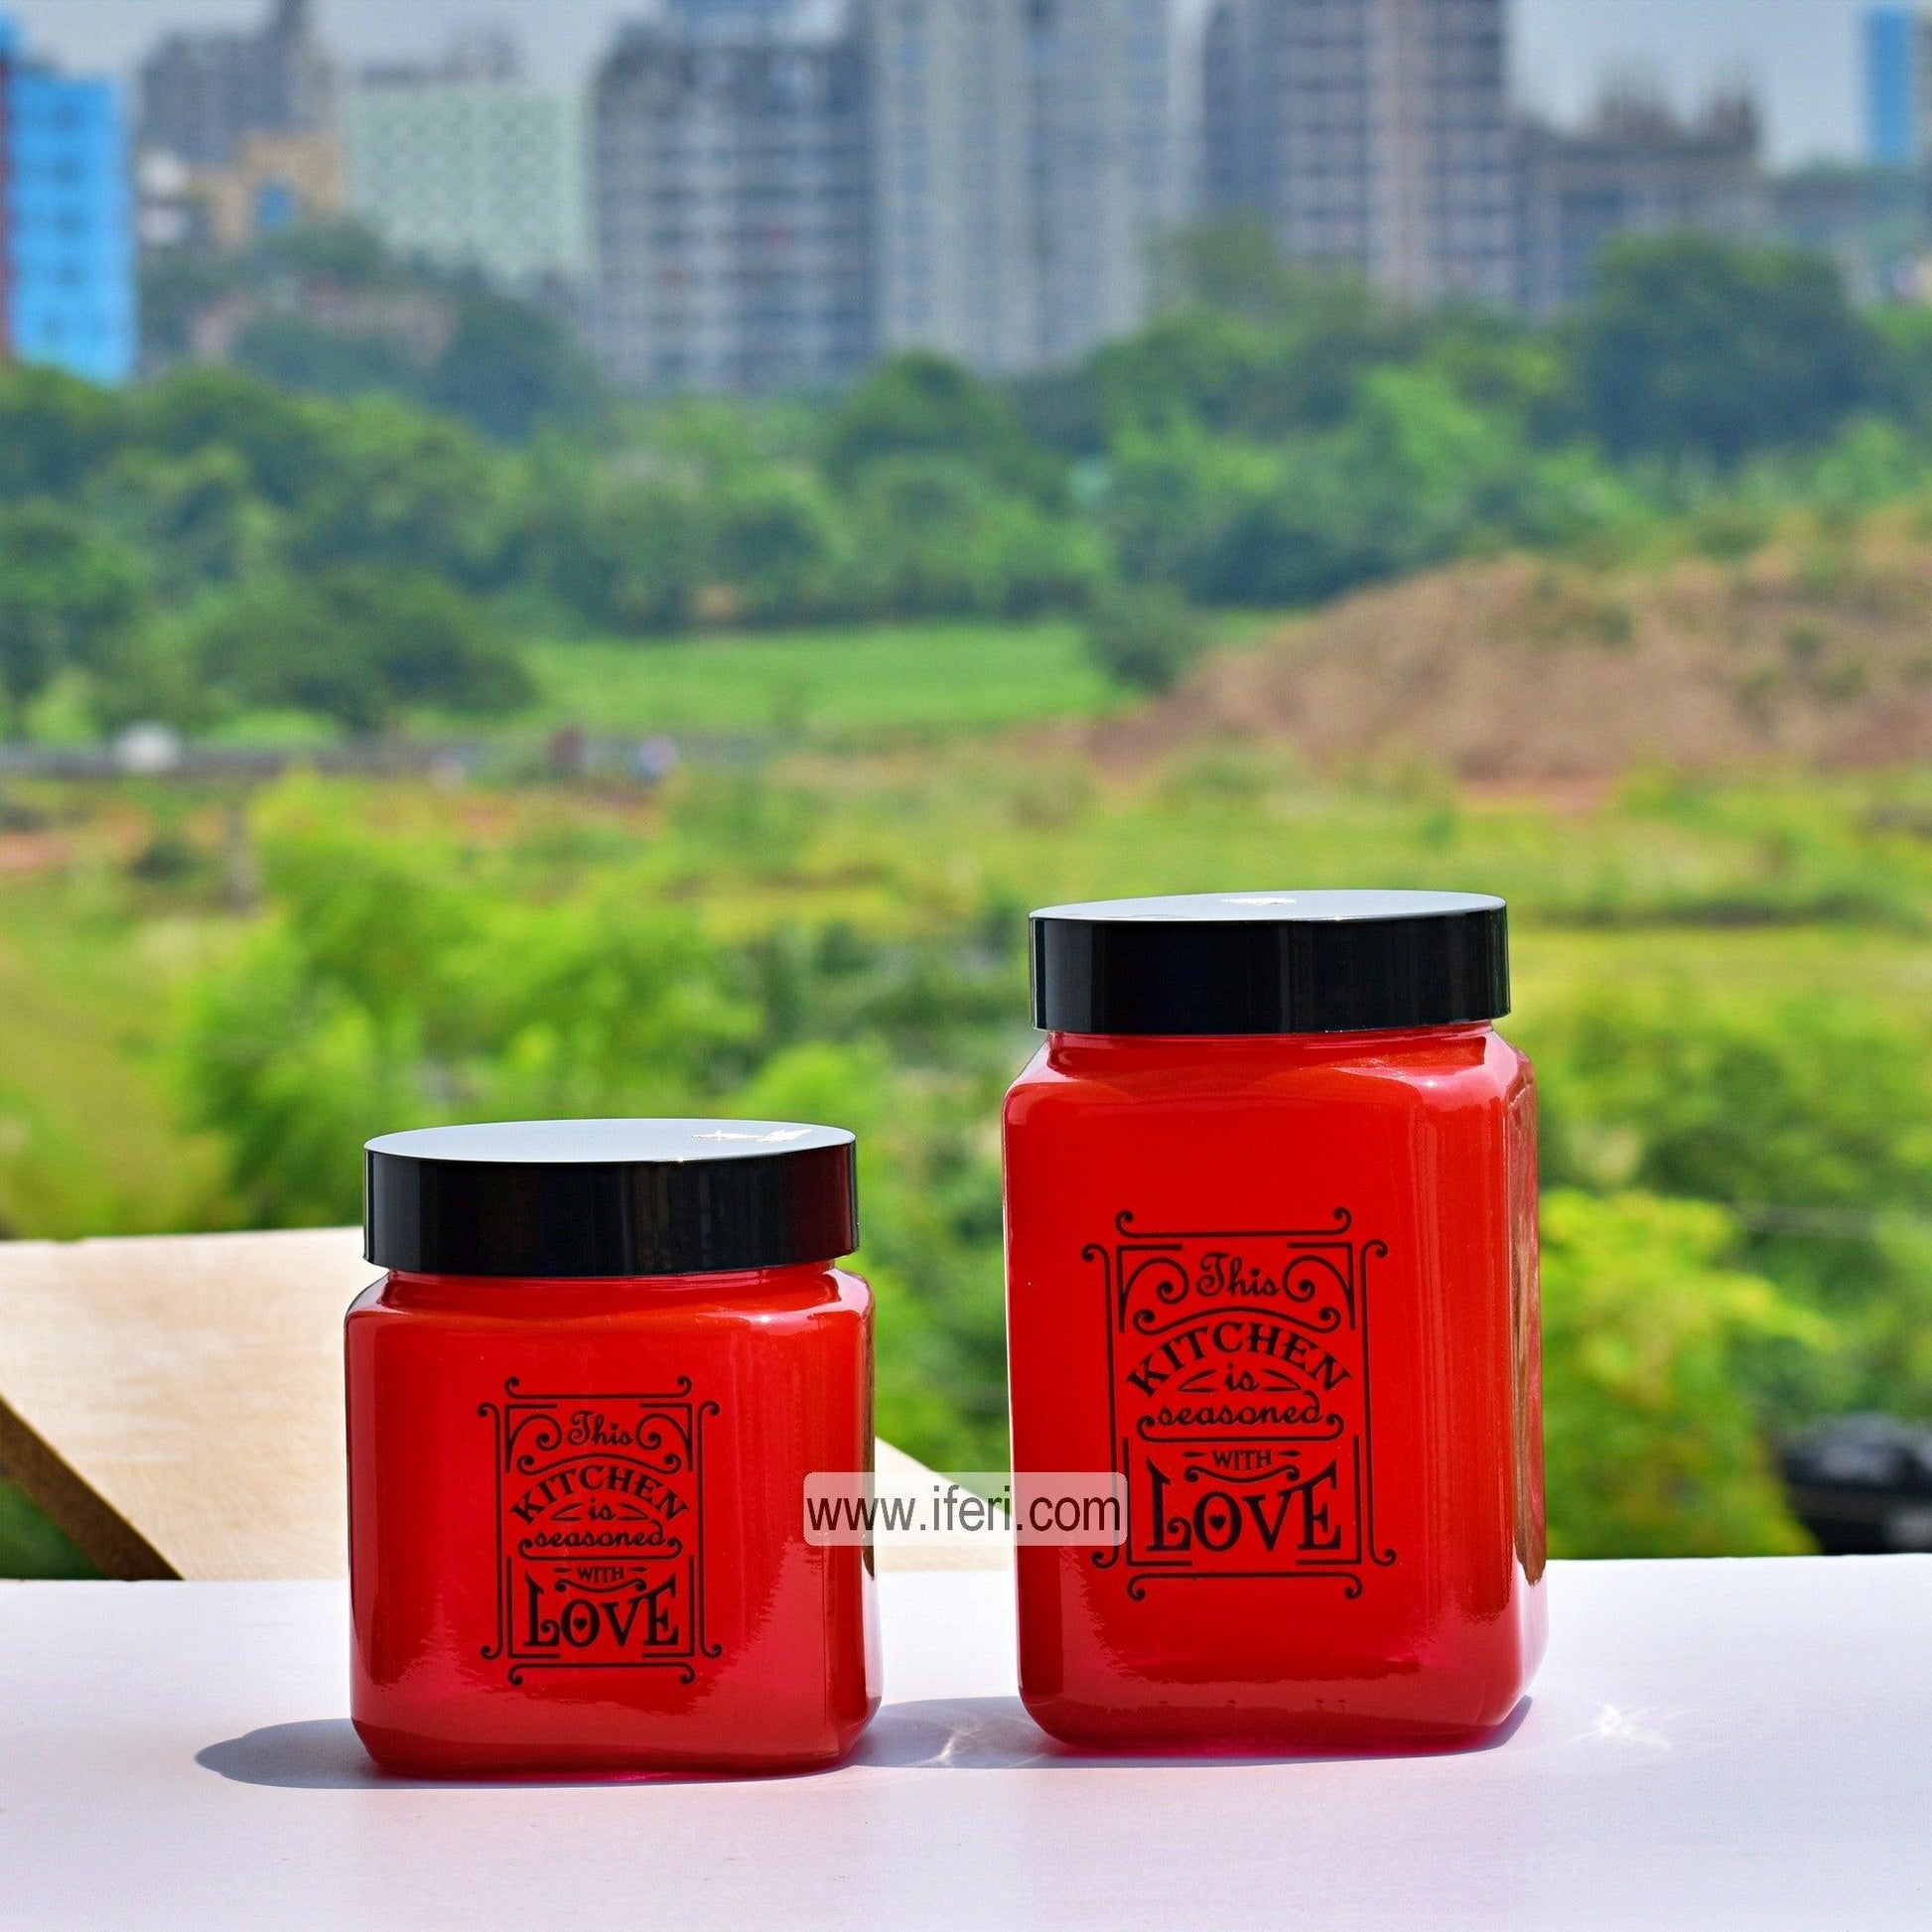 7 & 5 Inch Food Grade Airtight Glass Jar UT21070 Price in Bangladesh - iferi.com